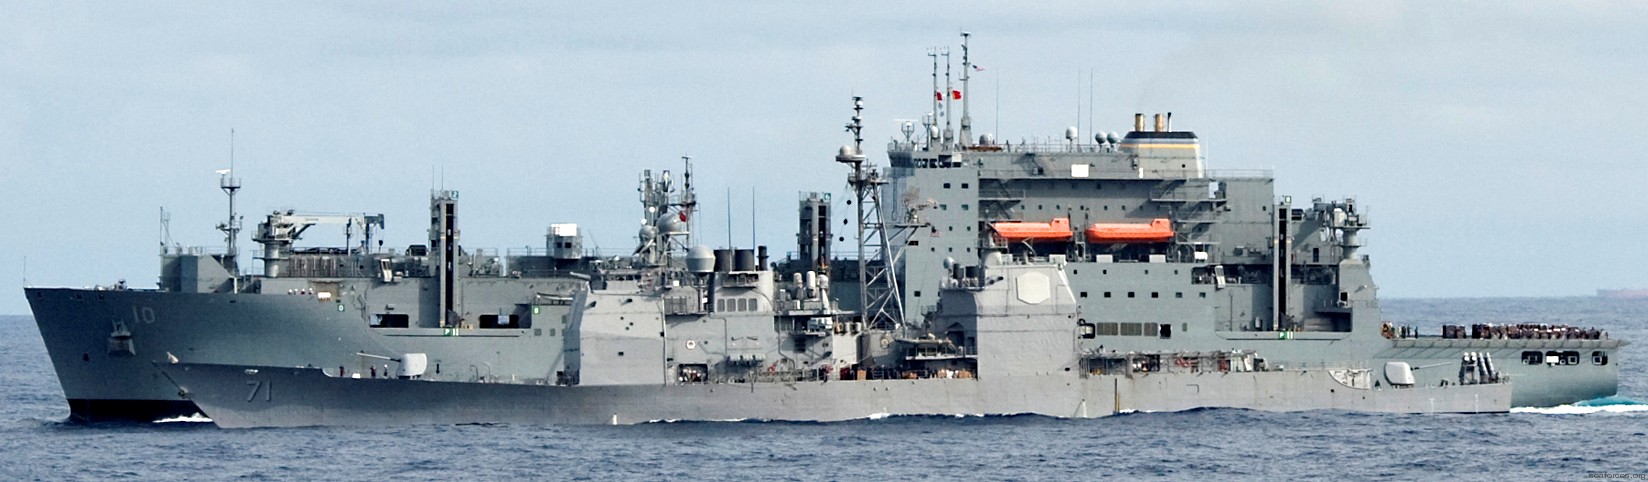 cg-71 uss cape st. george ticonderoga class guided missile cruiser us navy 39 andaman sea